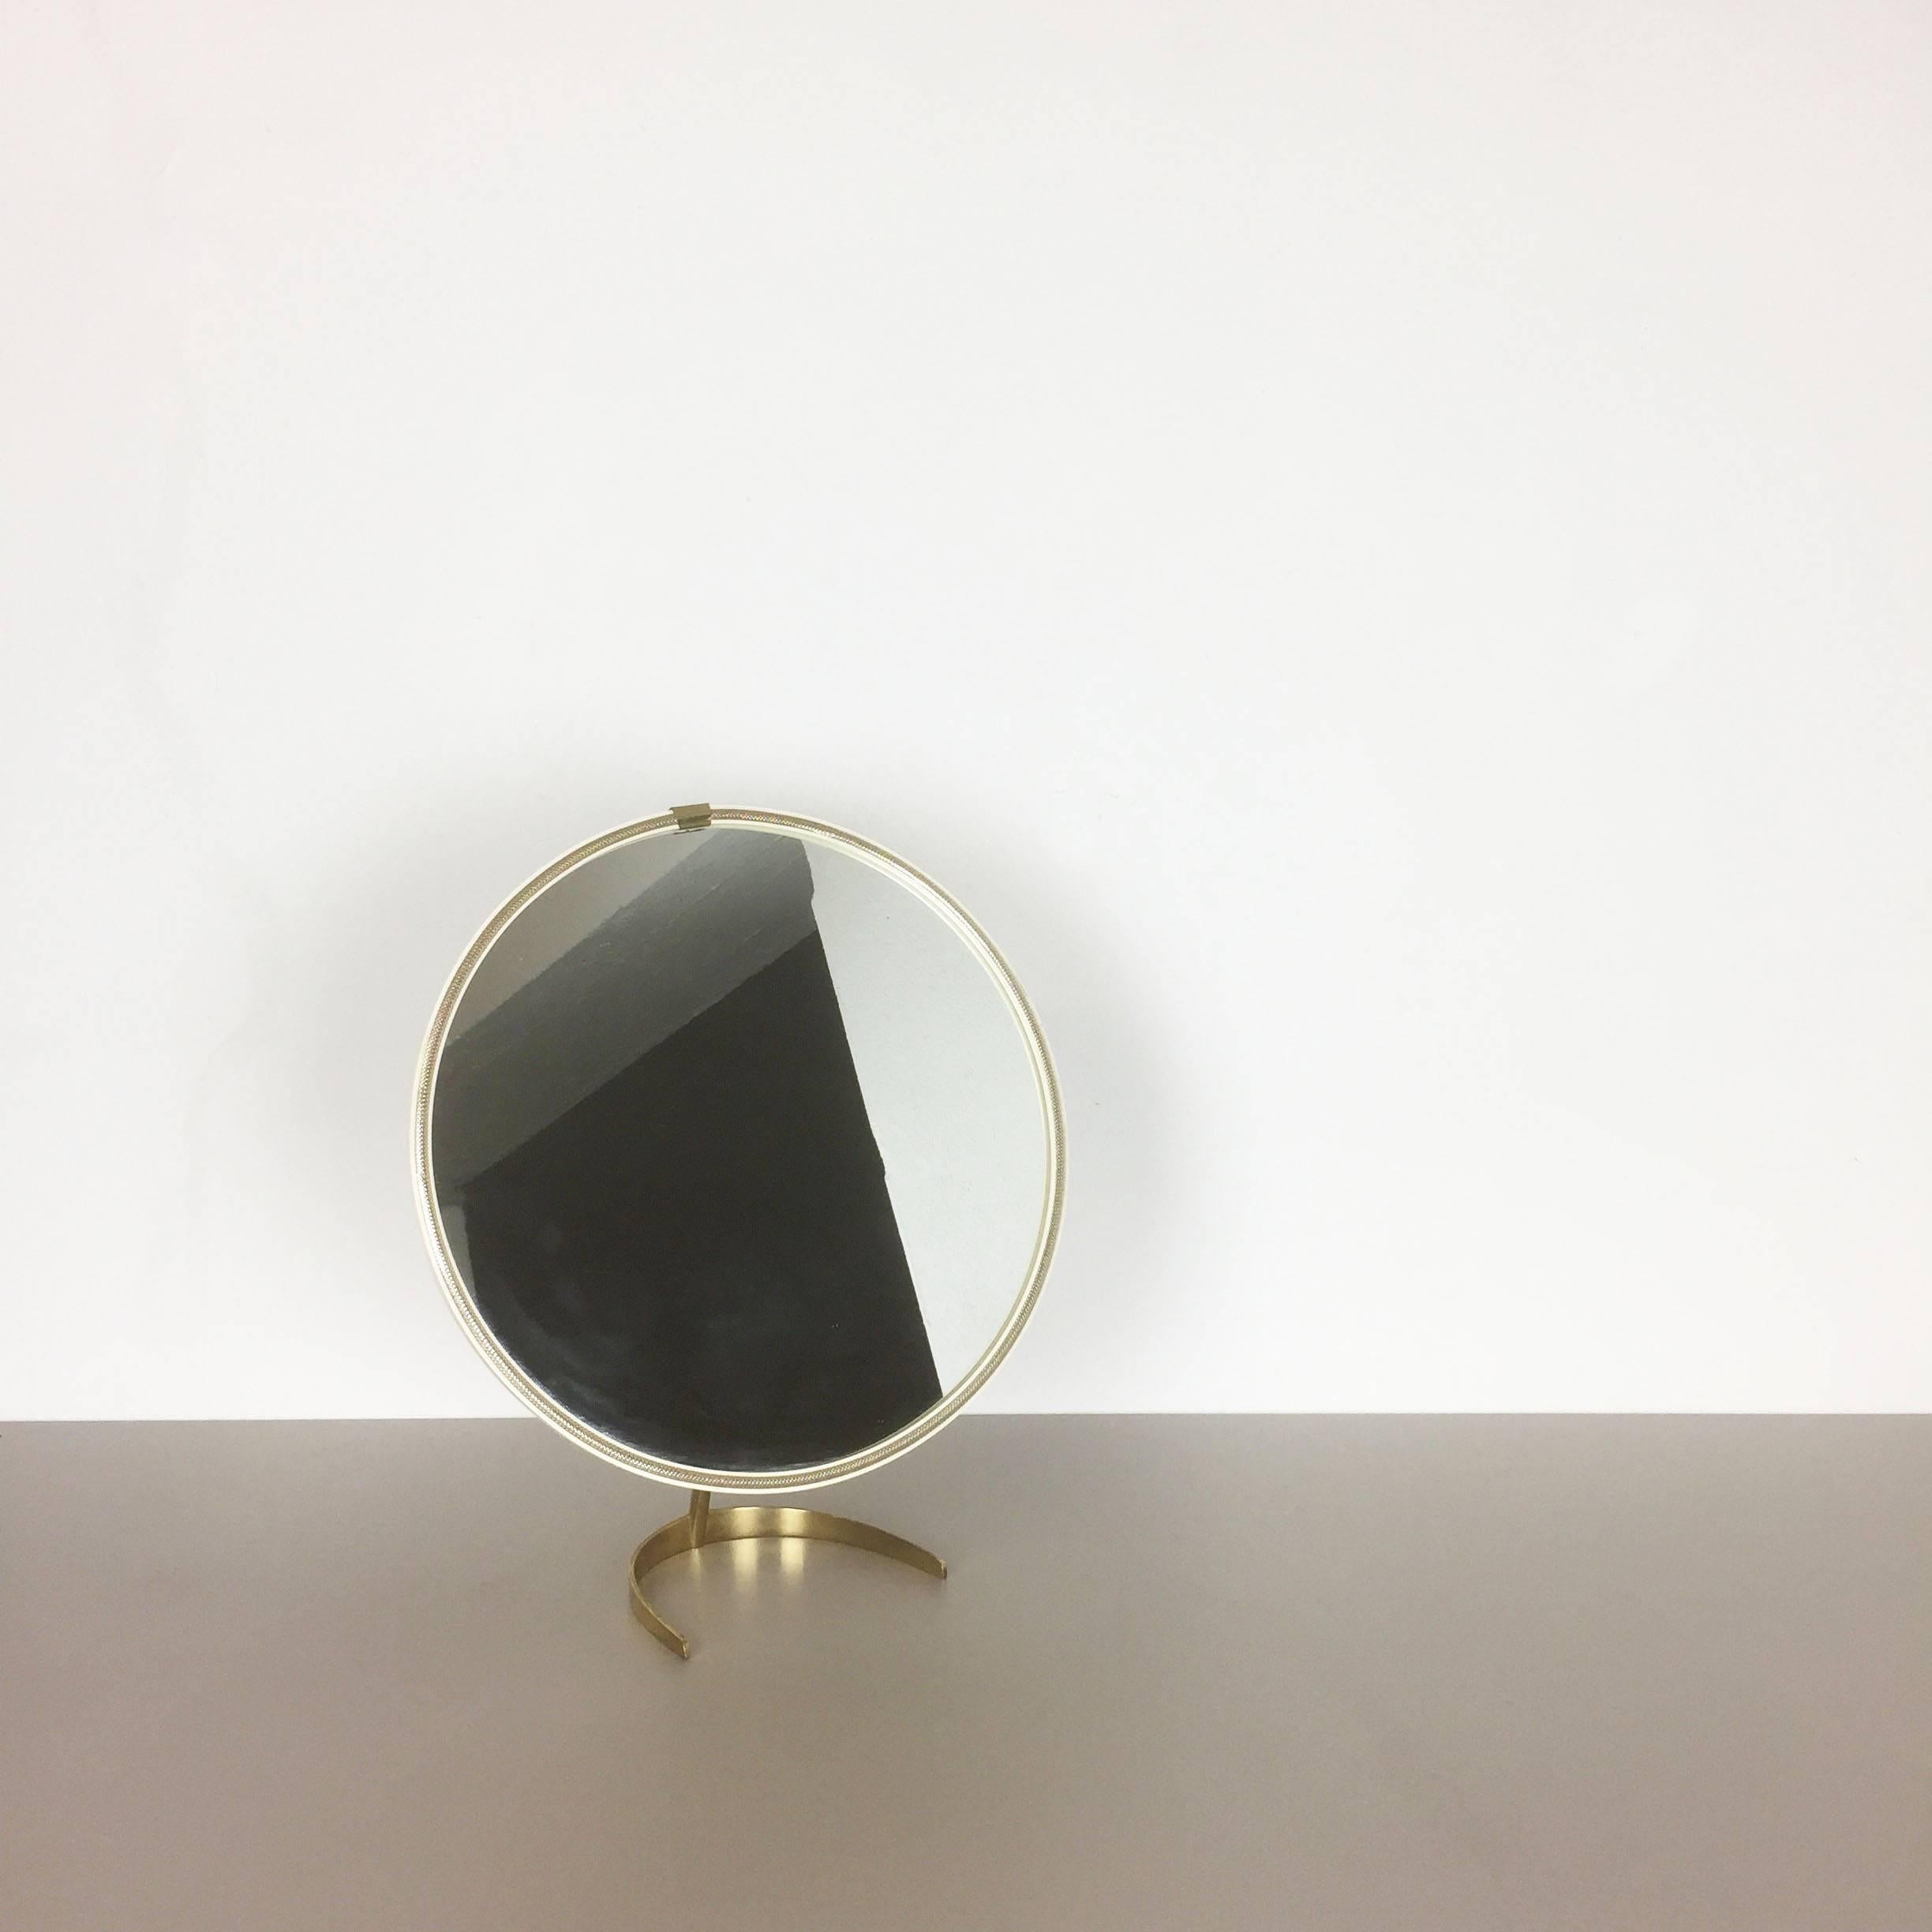 Article:

table mirror


Producer:

Vereinigte Werkstätten München attrib.


Origin:

Germany


Material:

Wood, glass, metal


Decade:

1950s


Description:

this original Midcentury table mirror was produced in the 1950s